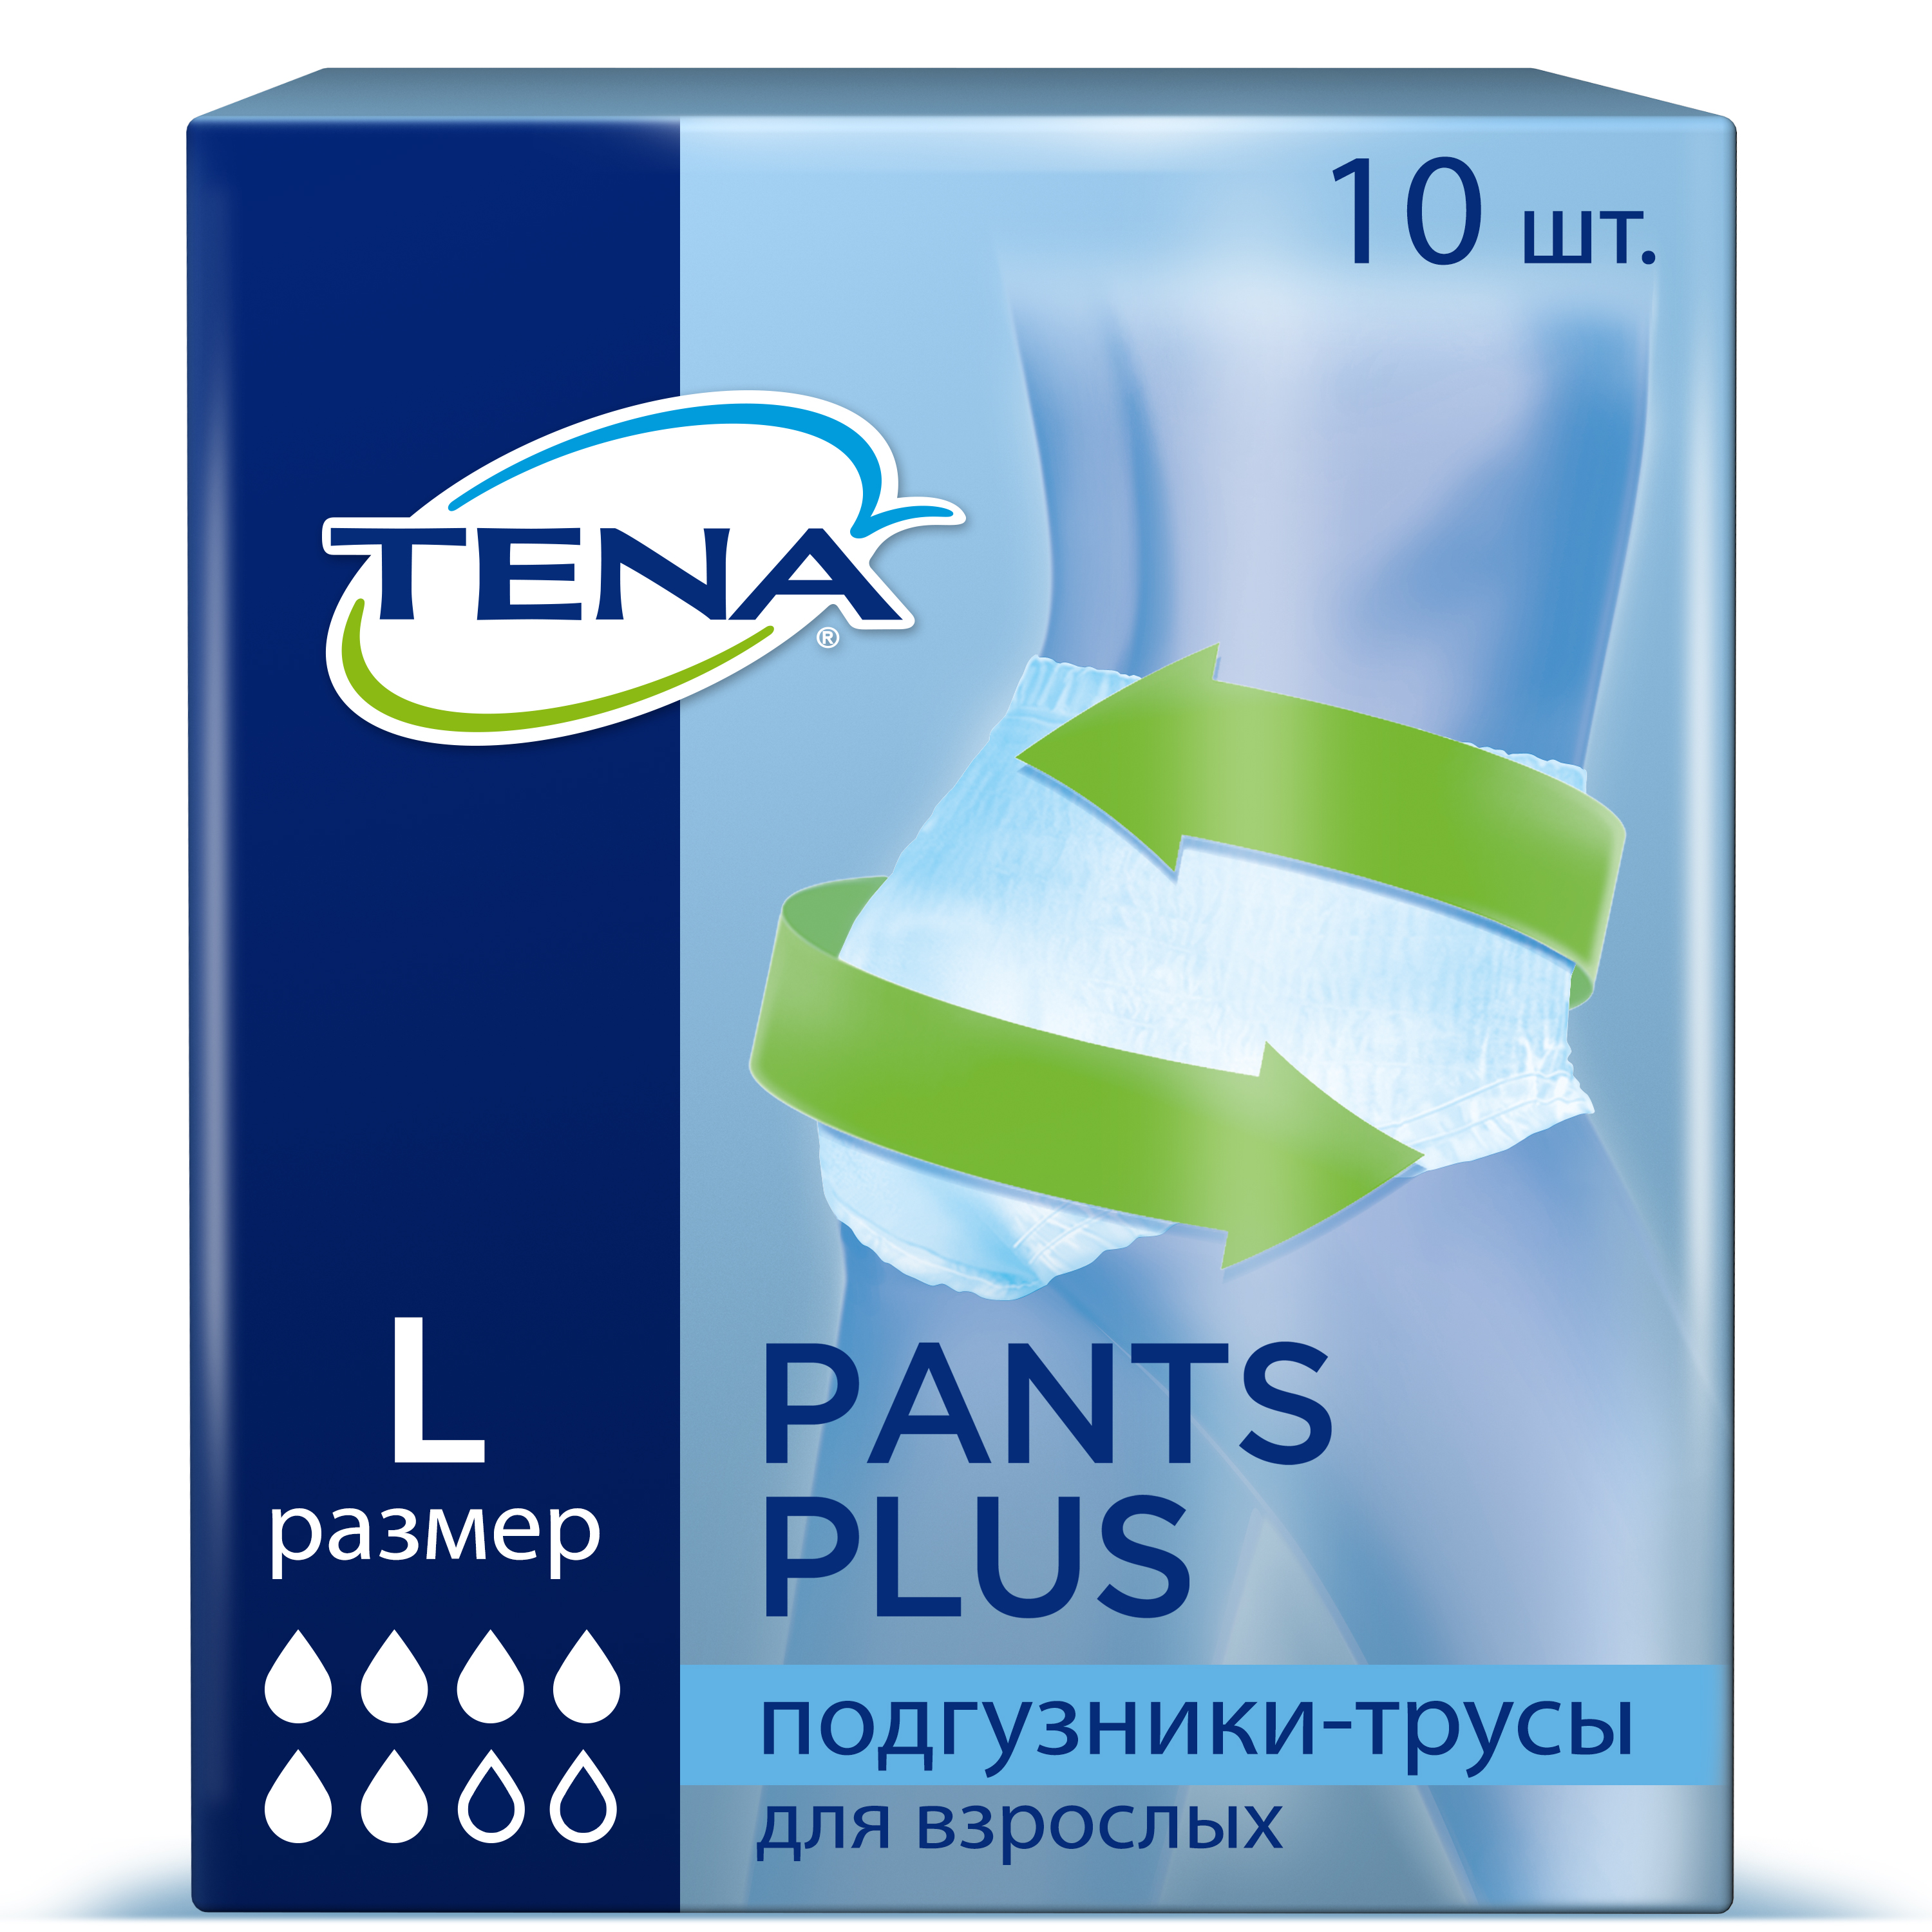 Подгузники для взрослых Tena Pants Plus L 10 шт.